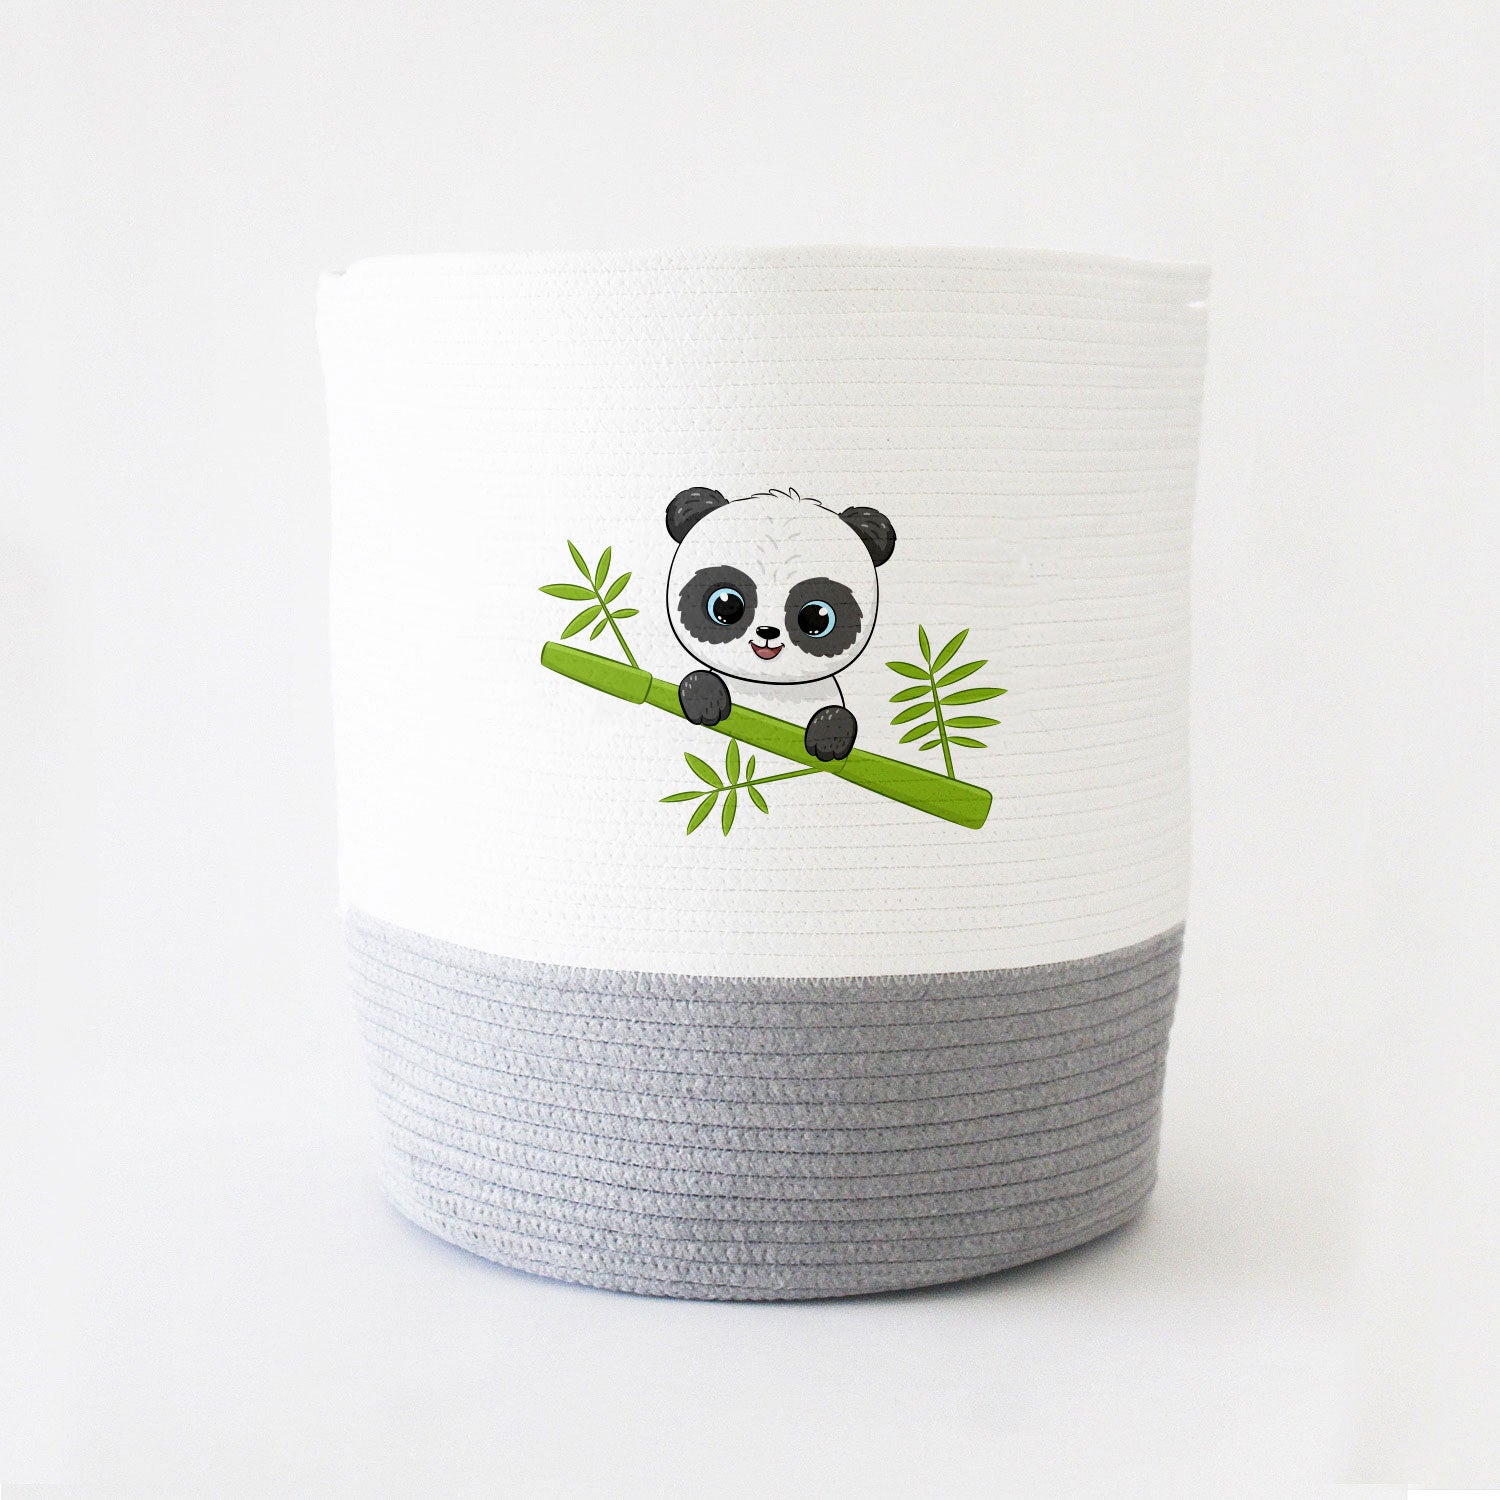 Personalized Storage Basket - Large - Panda Theme - Grey